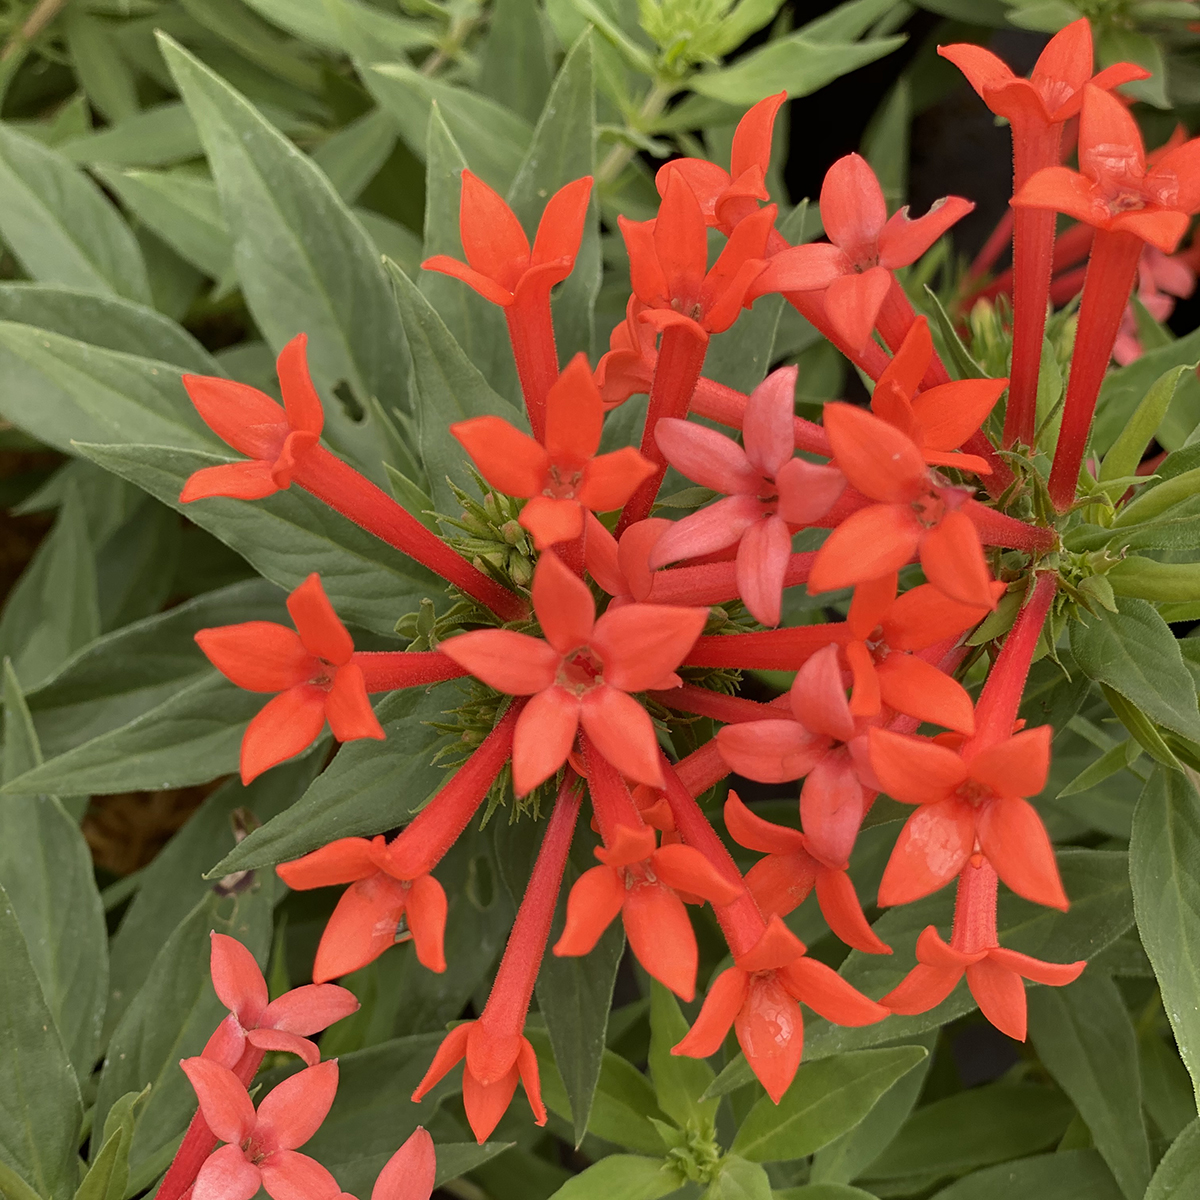 Estrellita Little Star firecracker bush has clusters of flowers of bright orange-red.